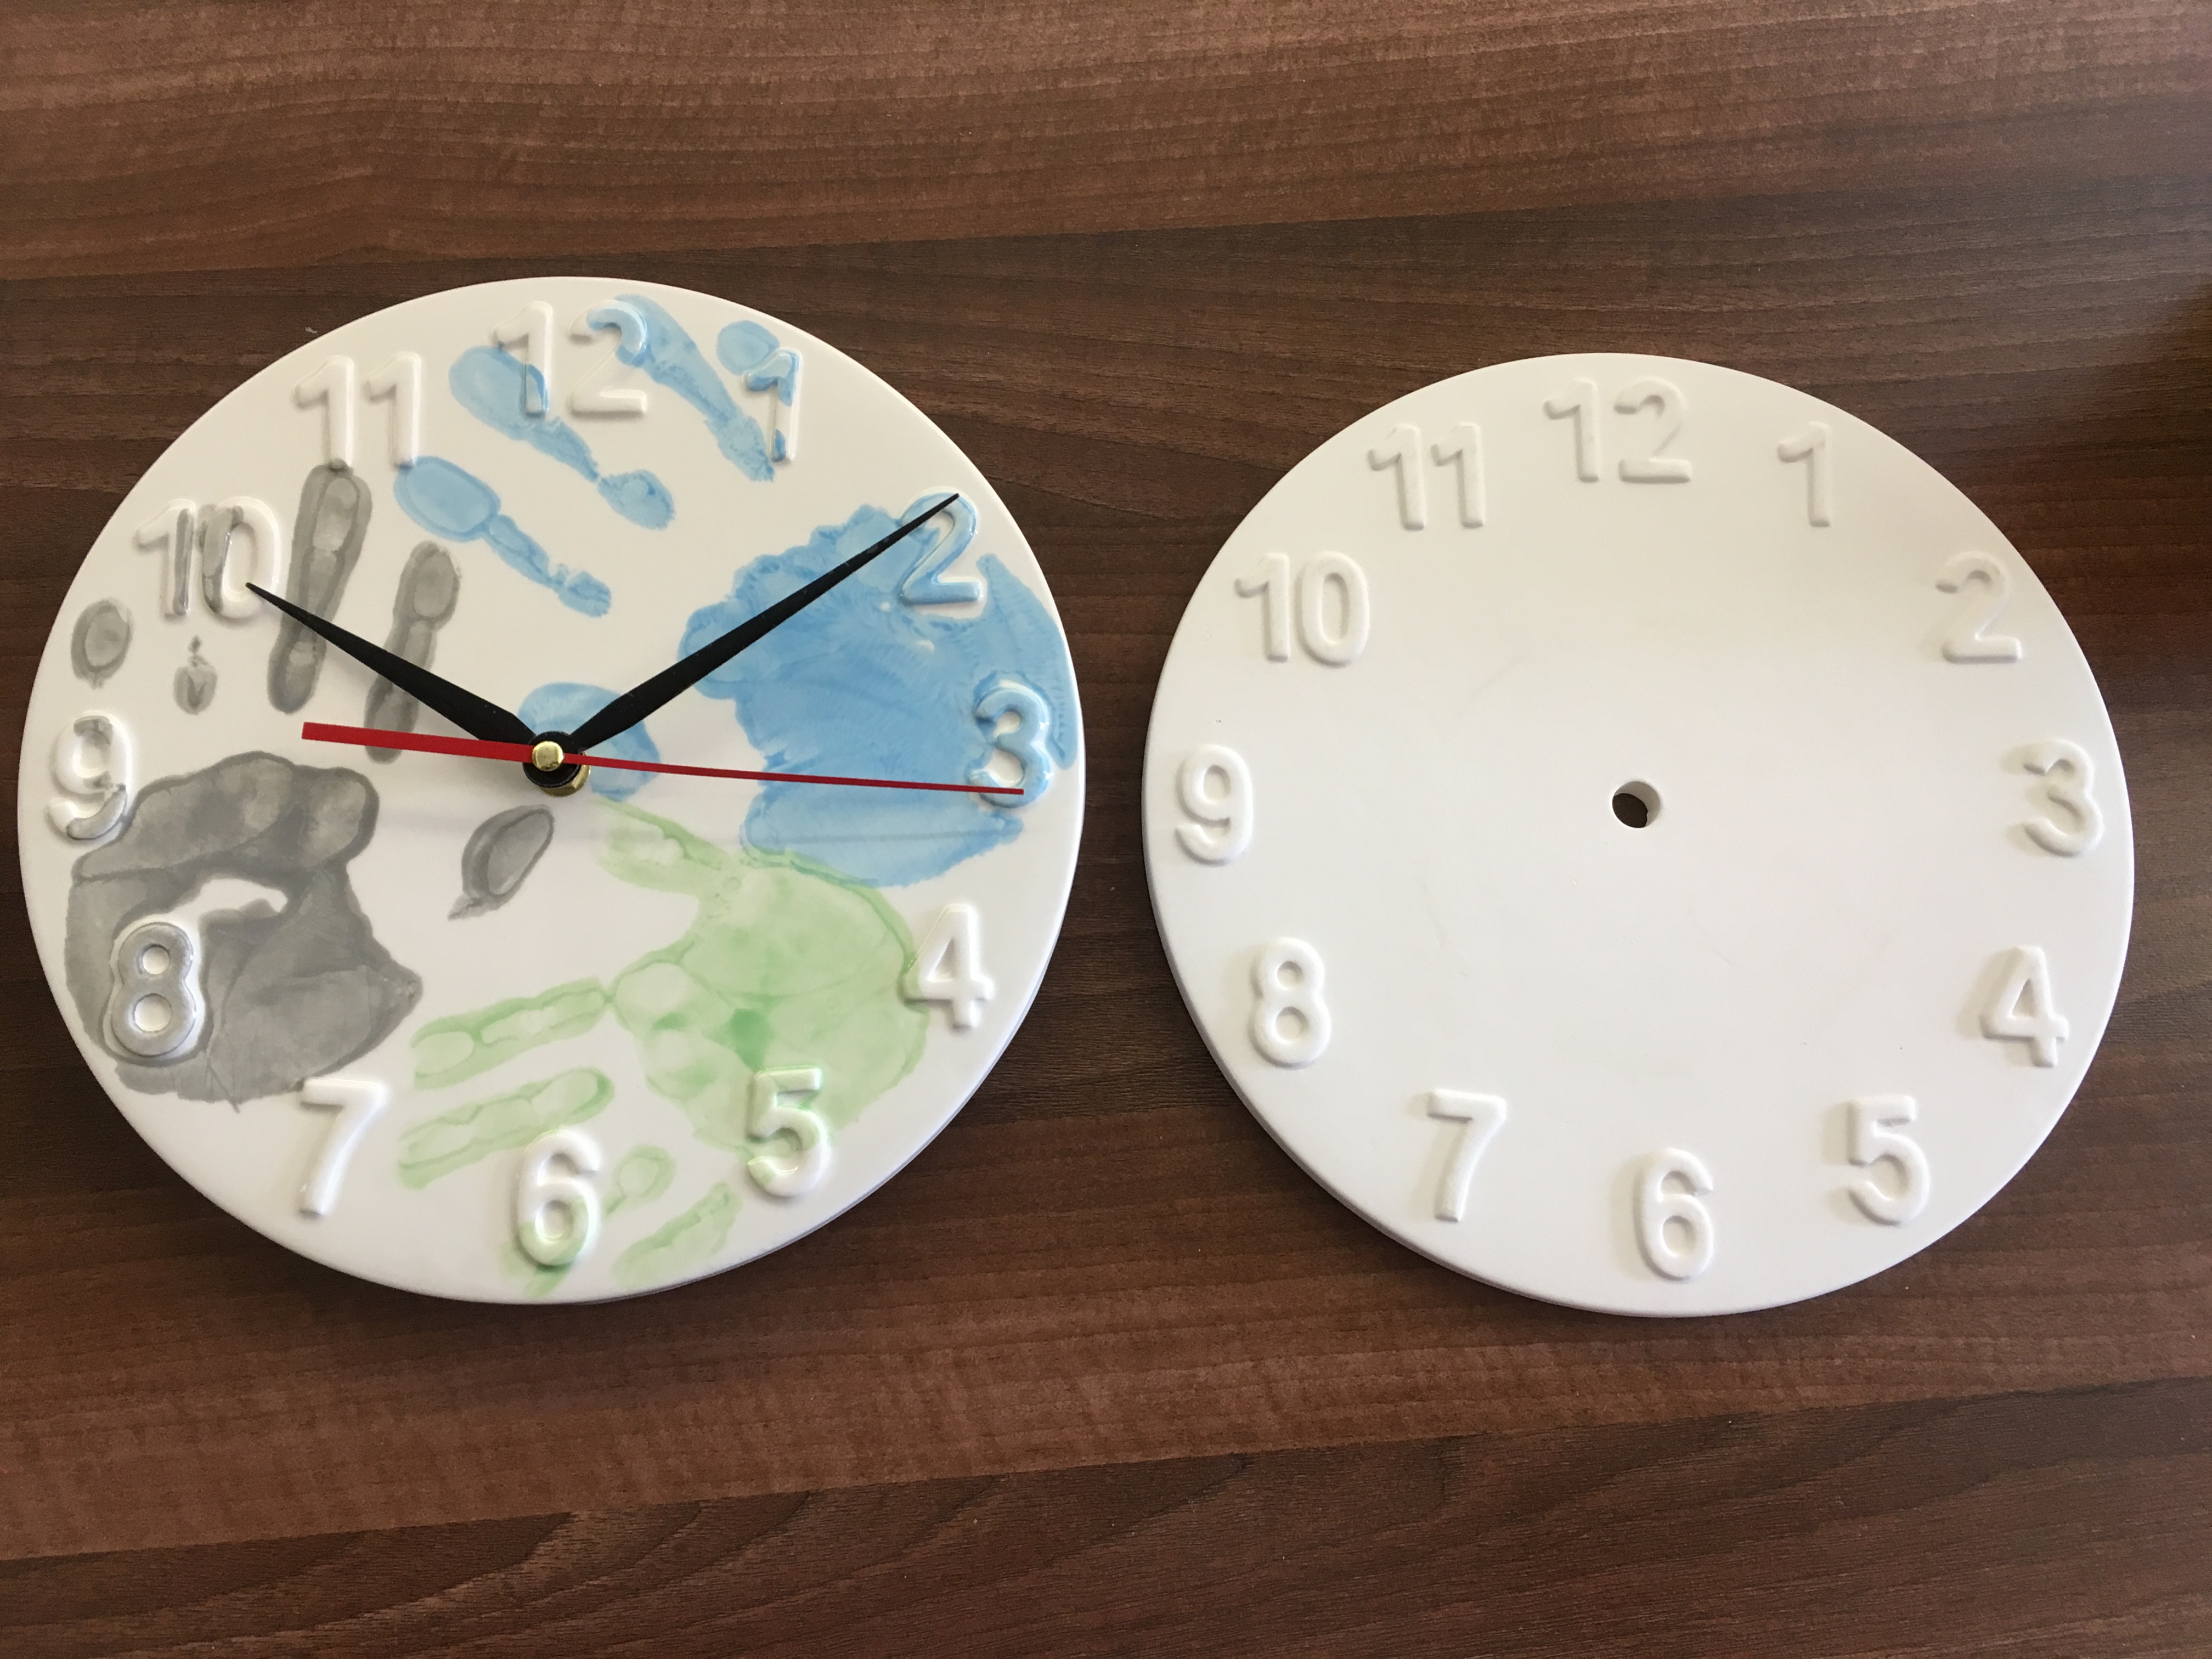 Hand prints on a ceramic clock